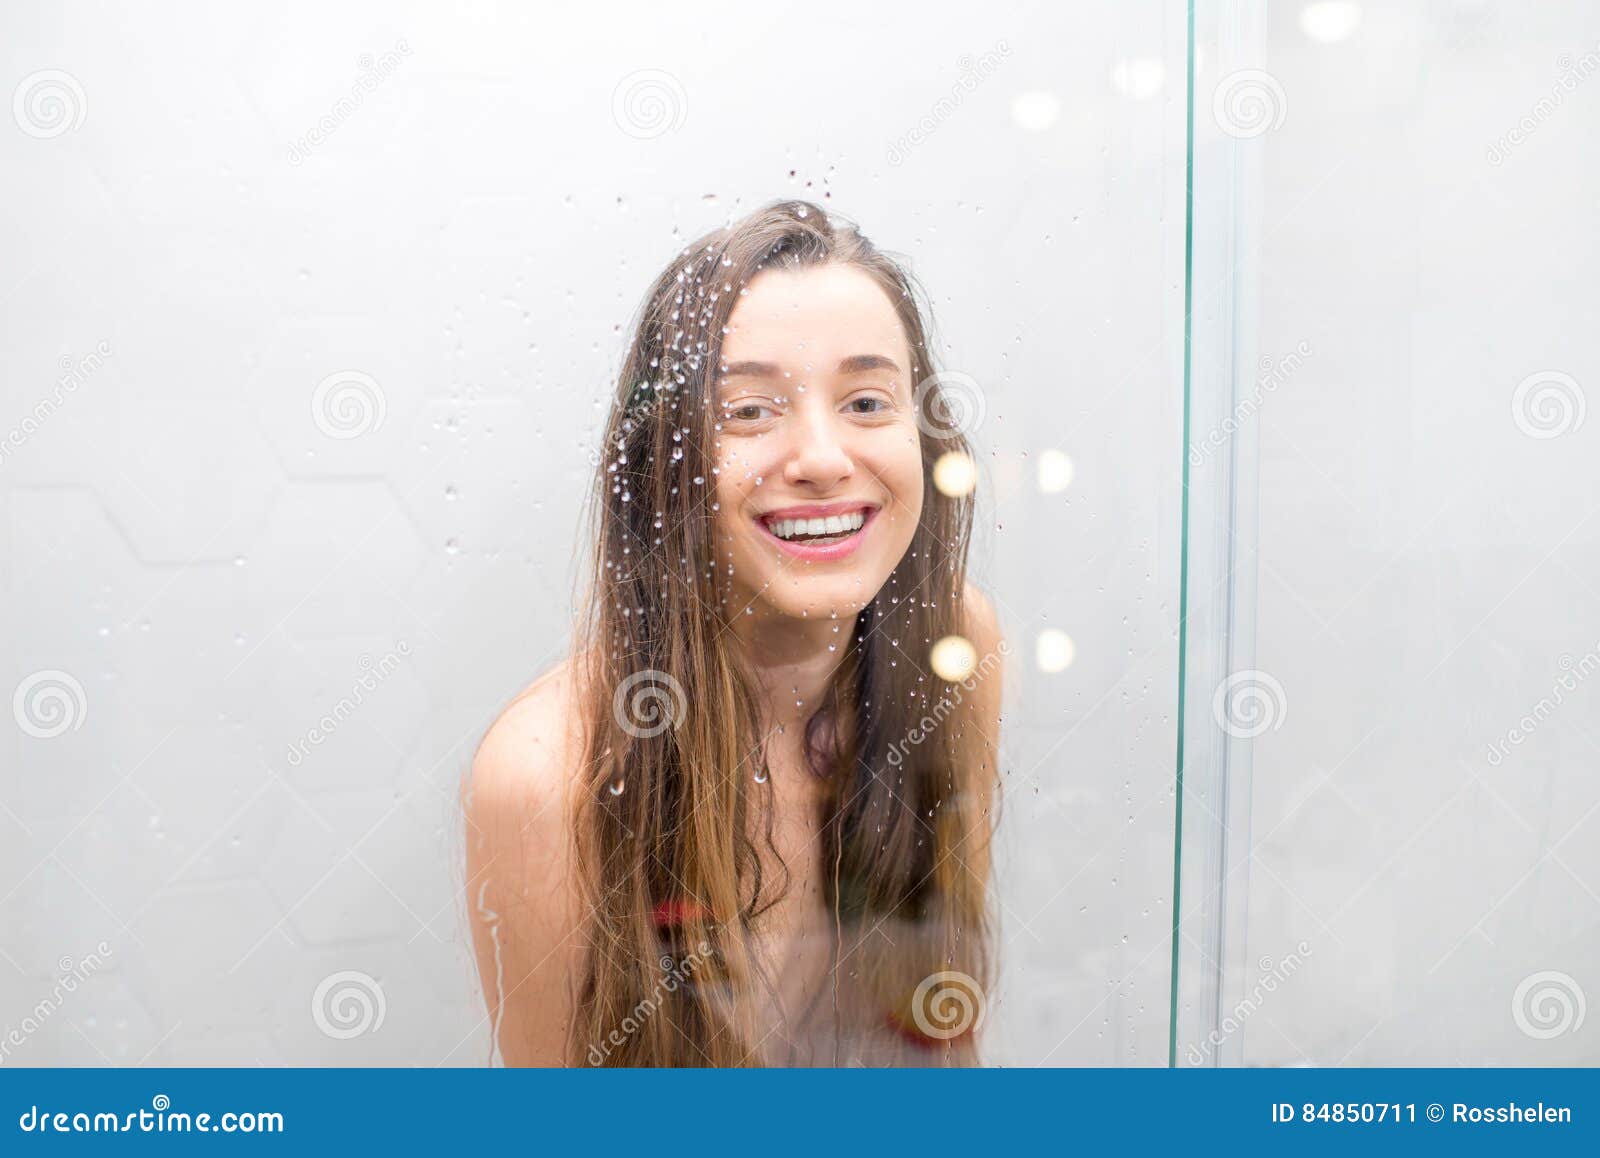 Girls takin a shower totally nude